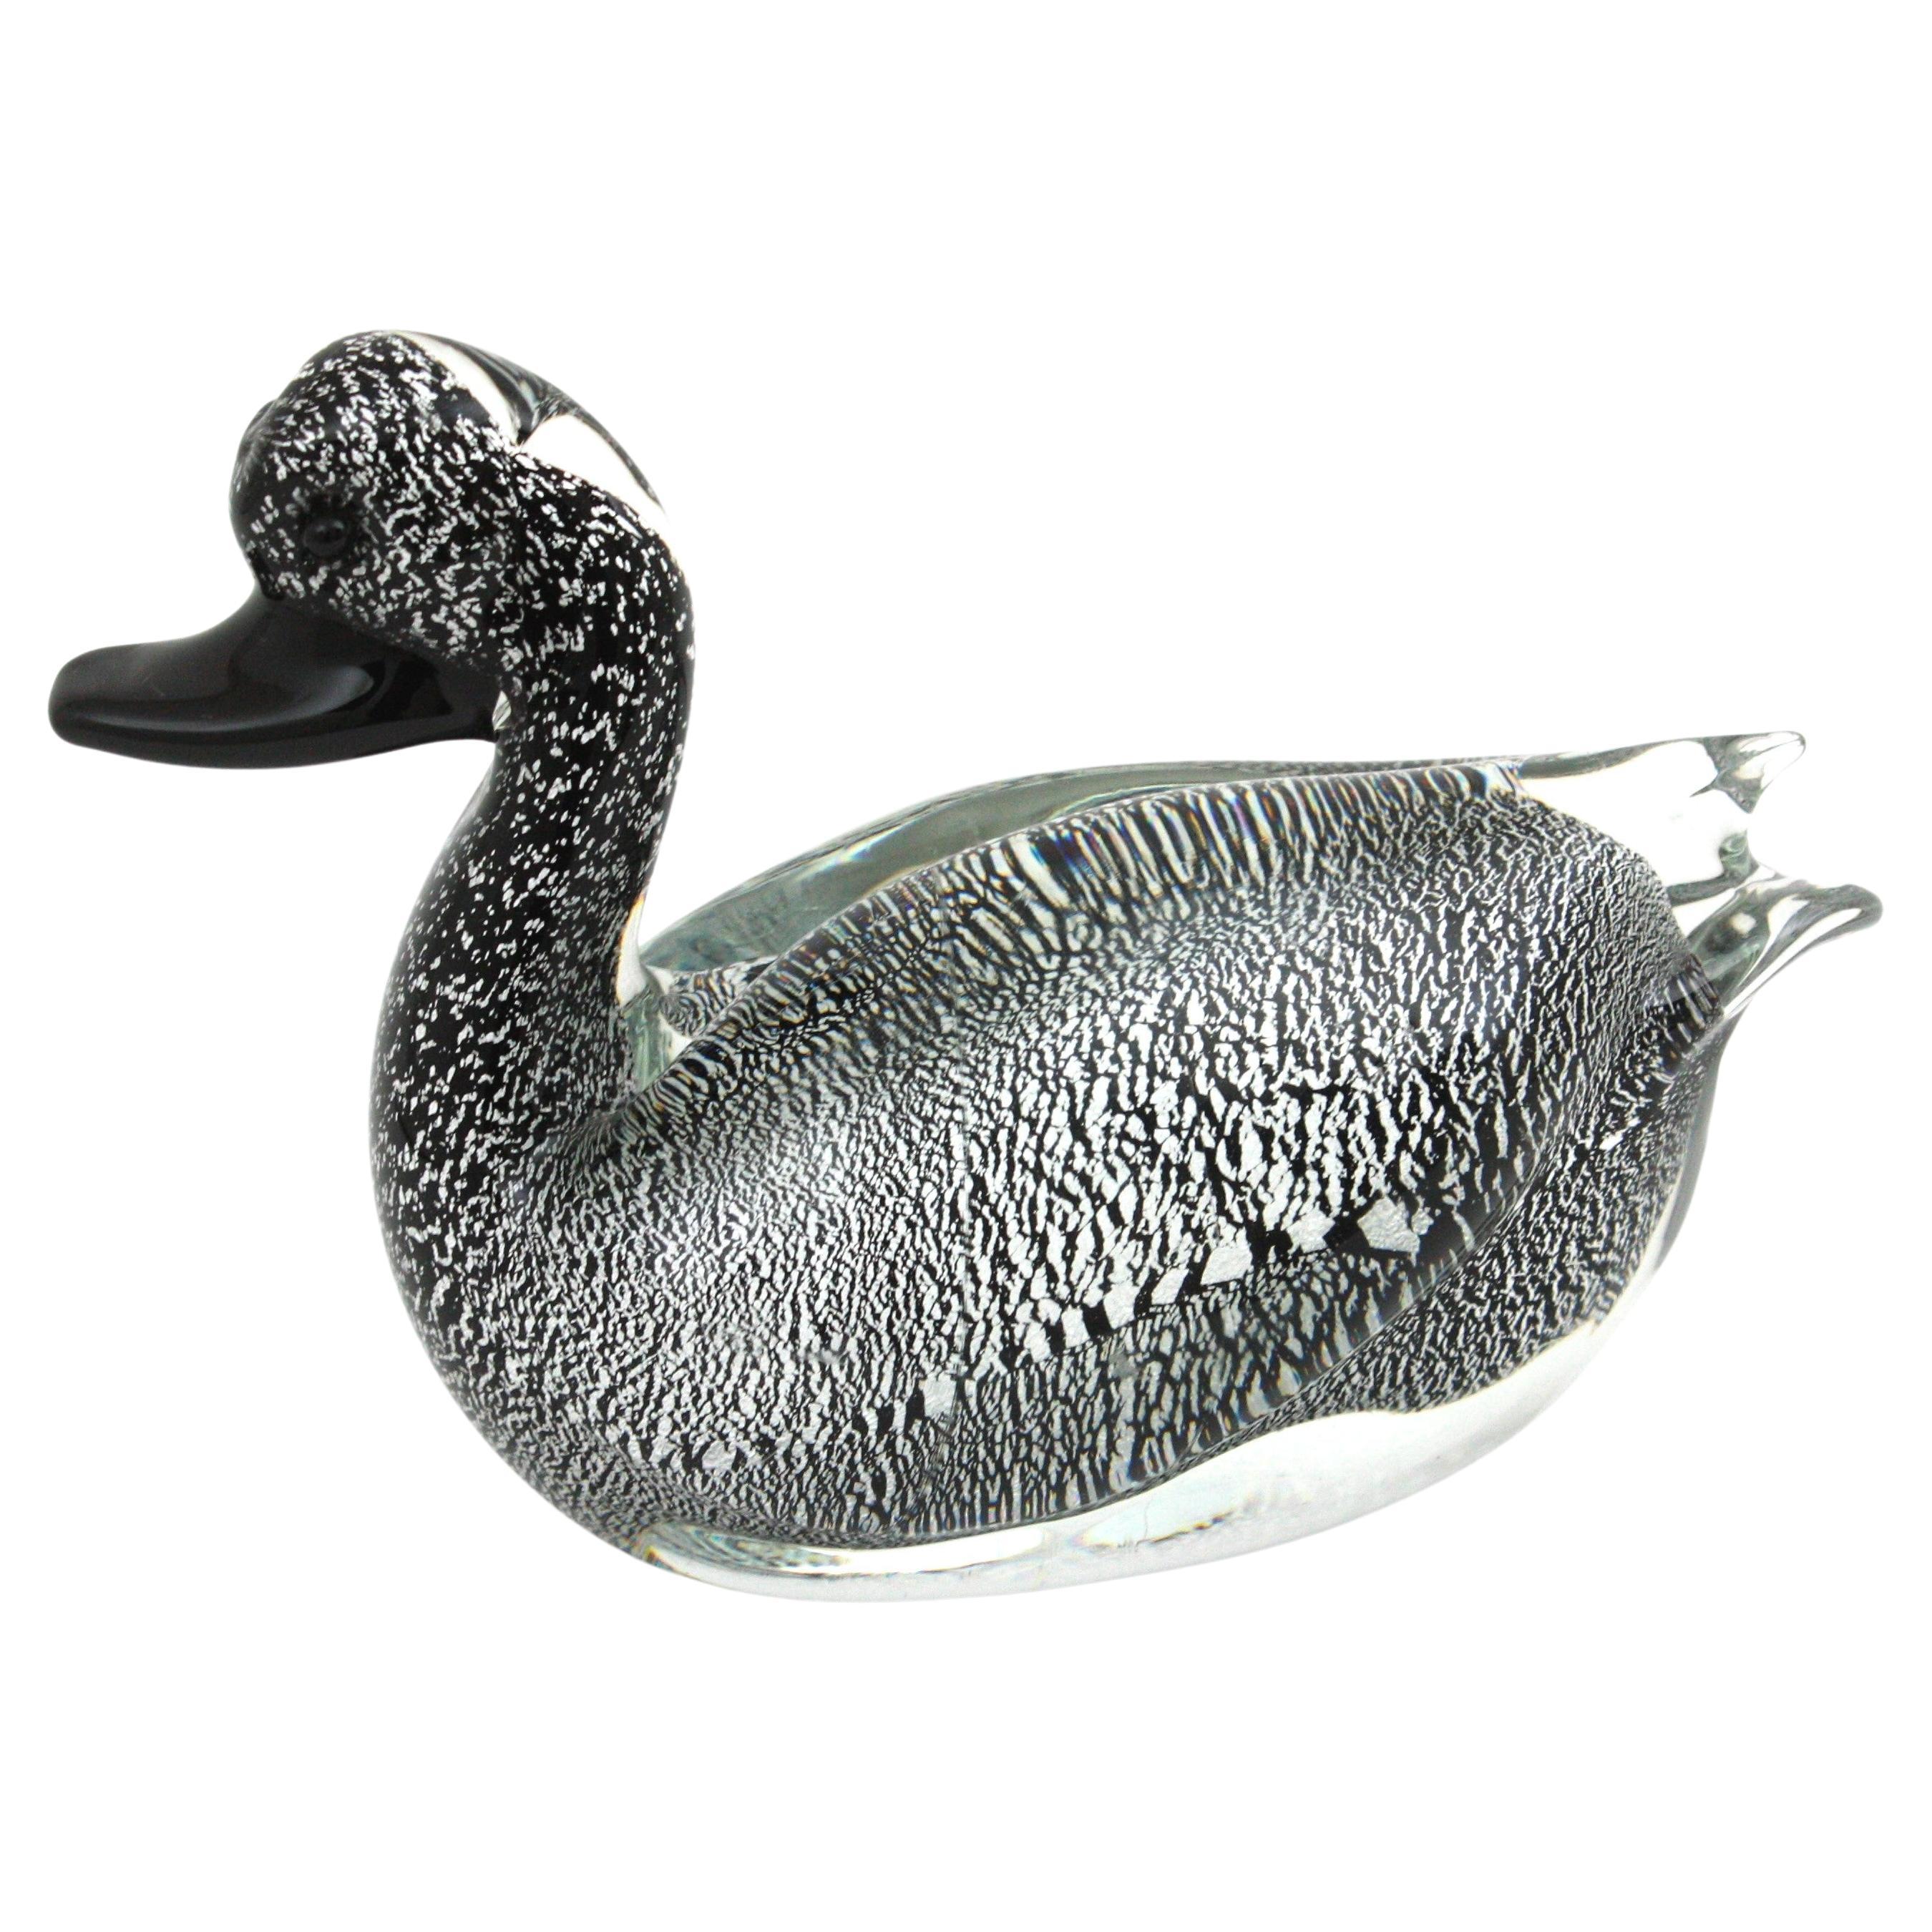  Murano Black Clear Duck Sculpture Art Glass Paperweight with Silver Flecks (Sculpture de canard en verre noir transparent avec des mouchetures d'argent)